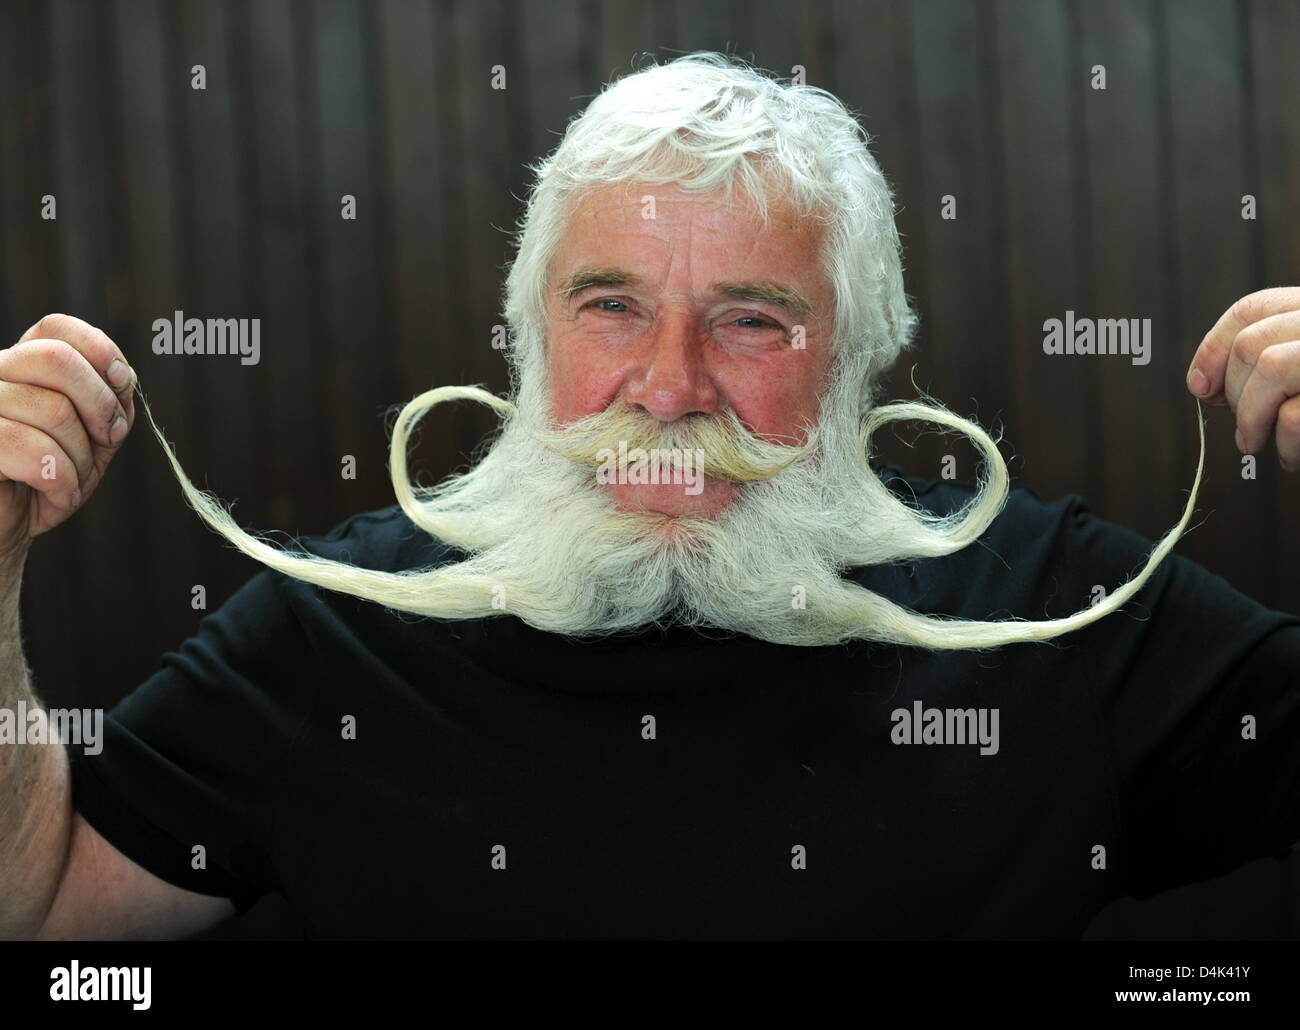 Beard whiskers -Fotos und -Bildmaterial in hoher Auflösung – Alamy